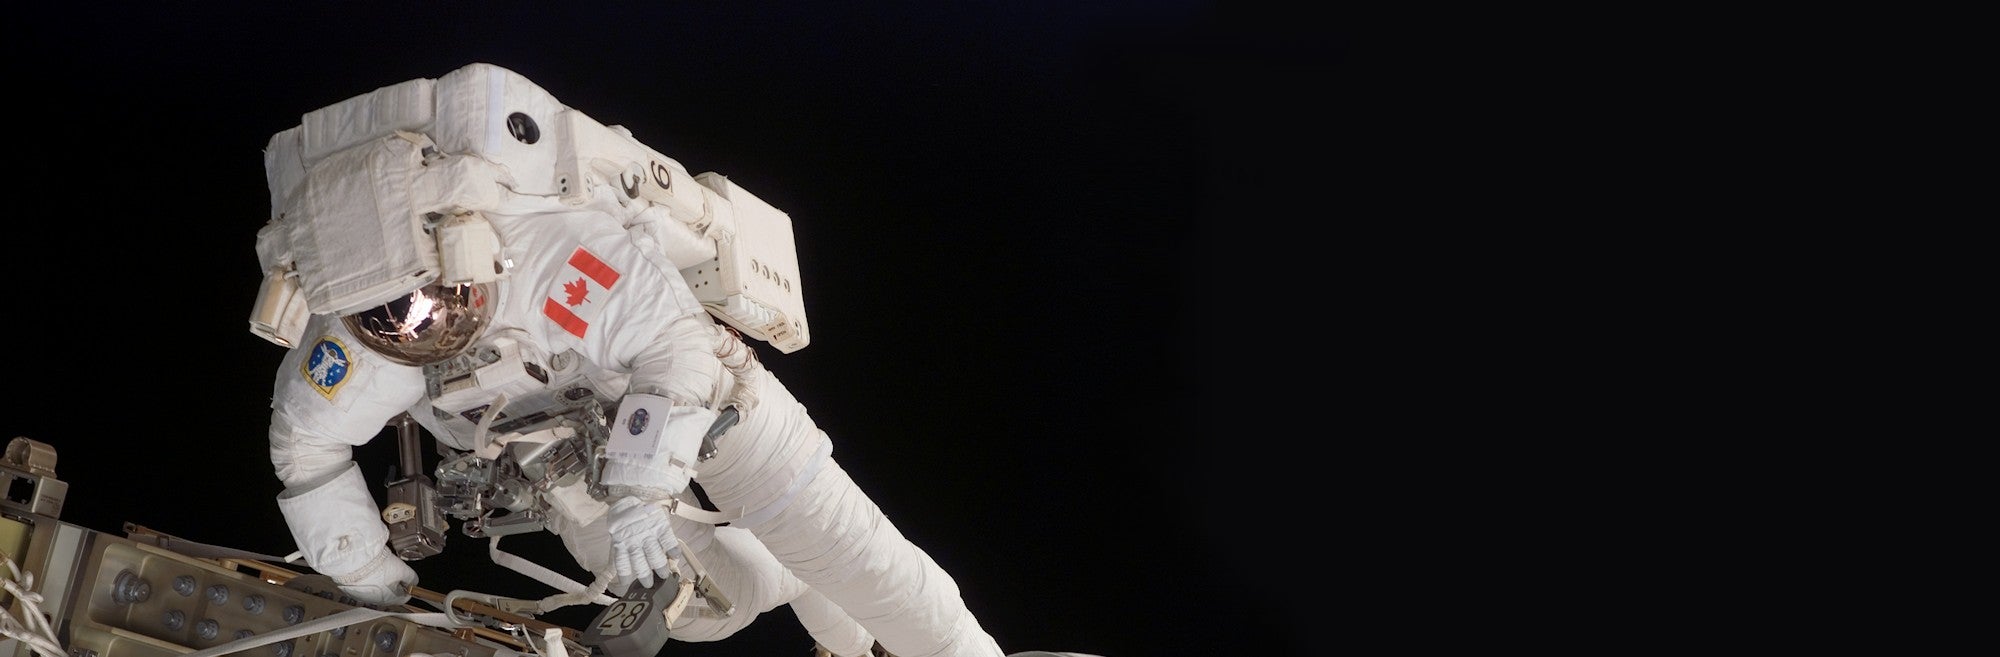 Canadian Space Agency astronaut on spacewalk.